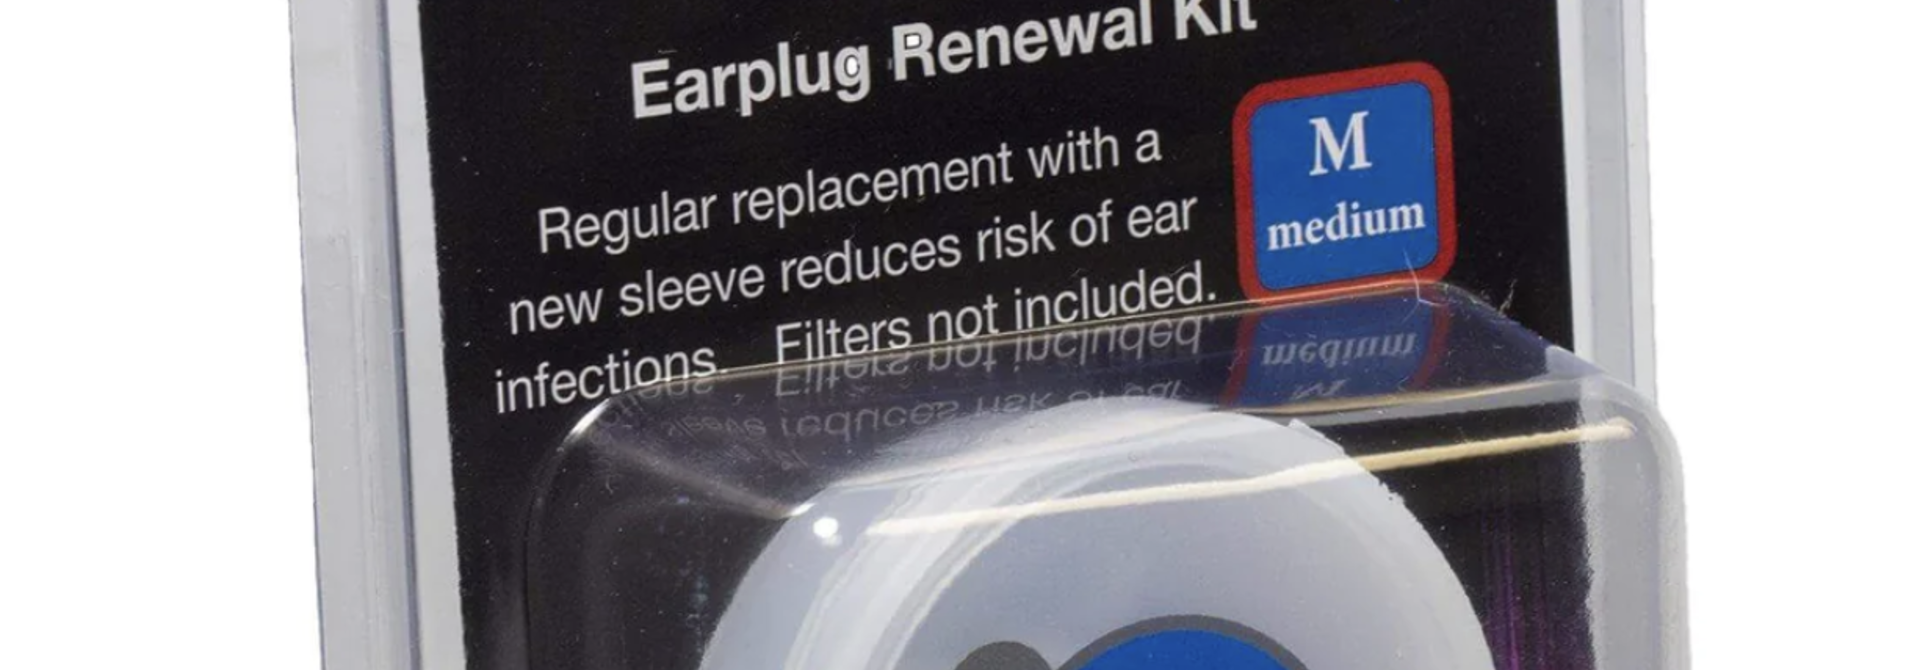 Earaser Earplugs Renewal Kit - Medium